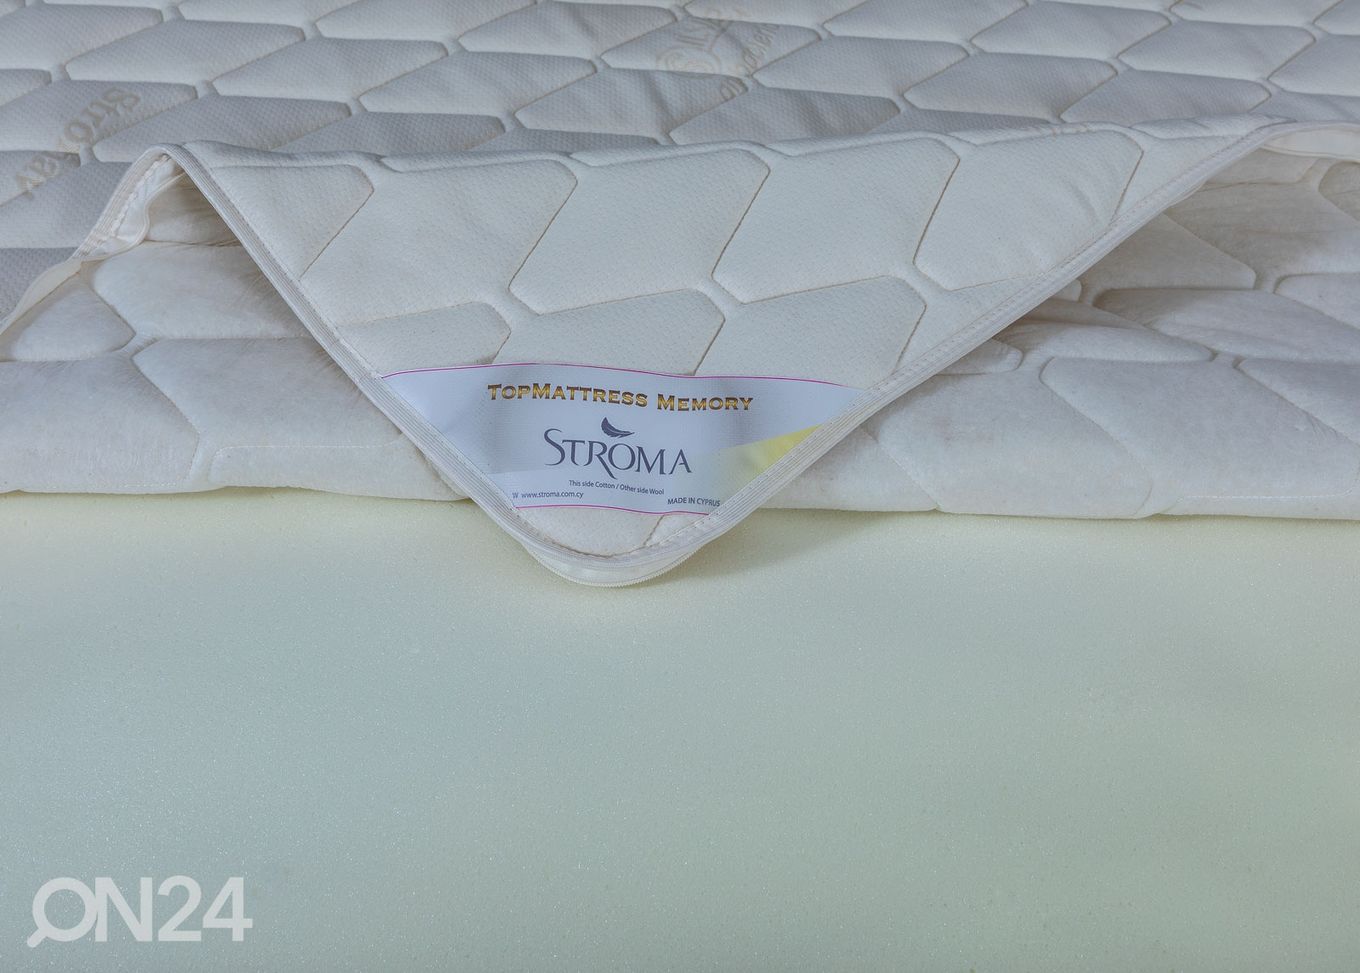 Stroma kattemadrats Top Memory 180x200x5 cm suurendatud